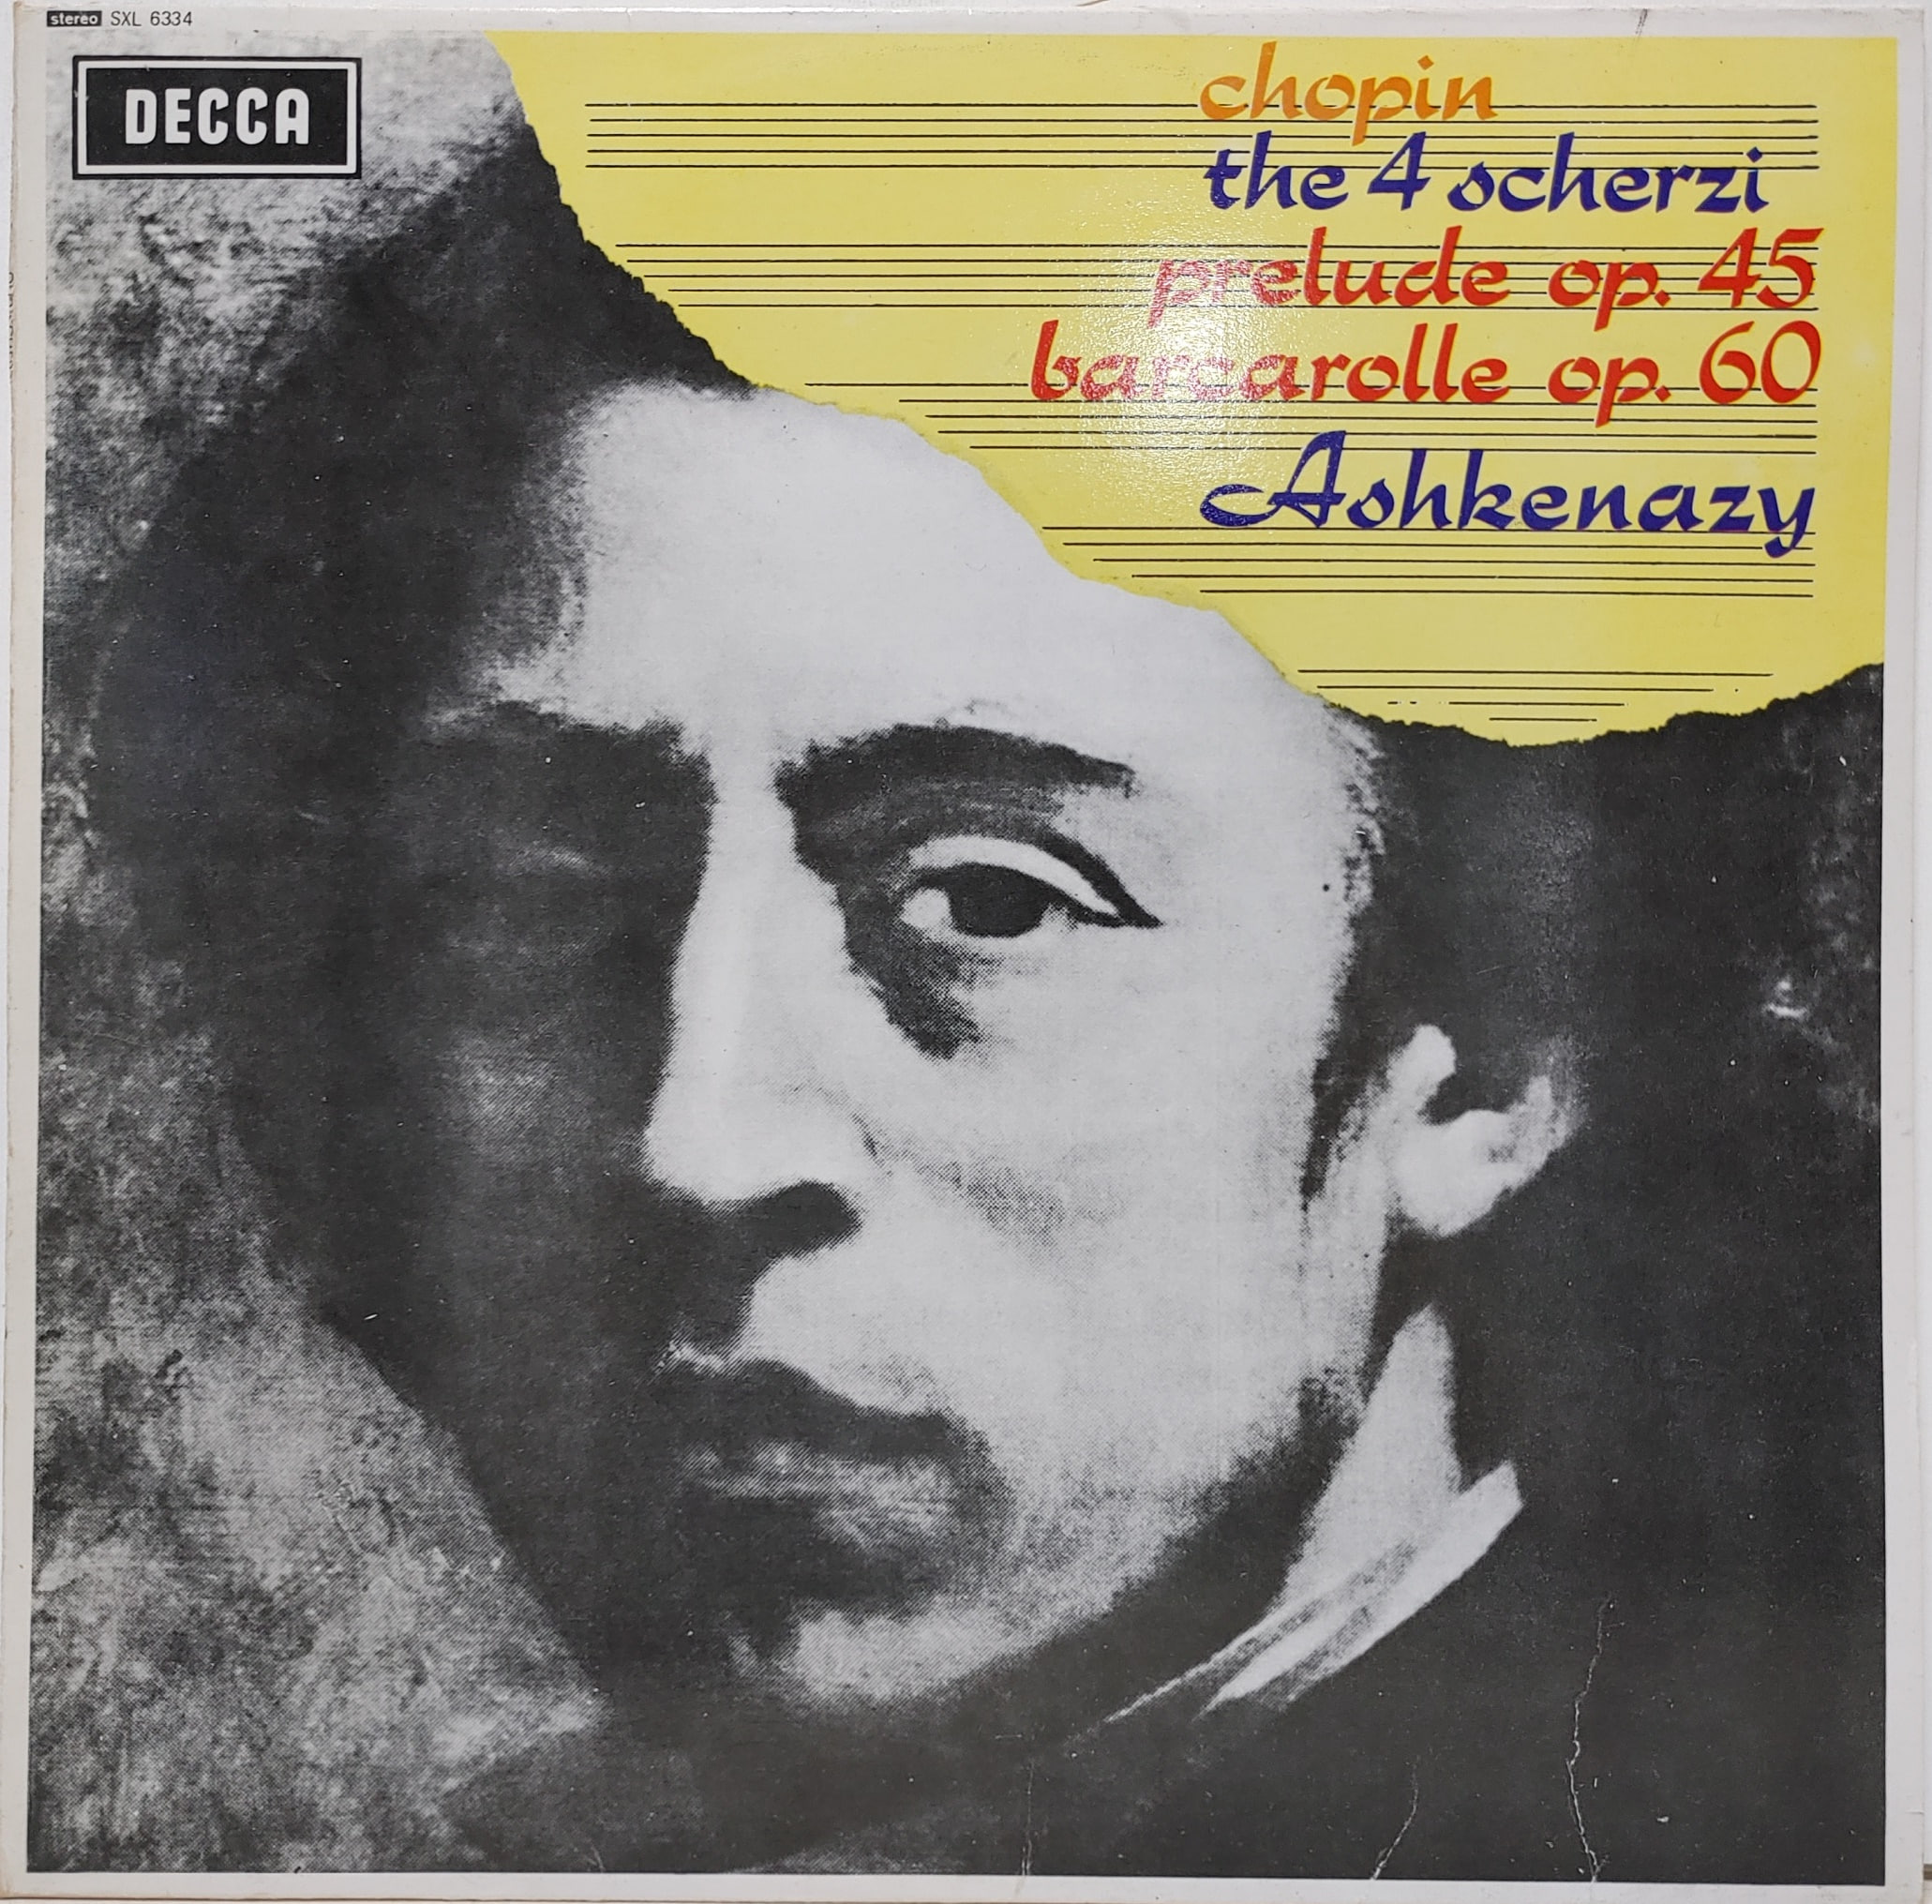 Chopin / The 4 Scherzi, Prelude, Op.45, Barcarolle, Op.60 Vladimir Ashkenazy